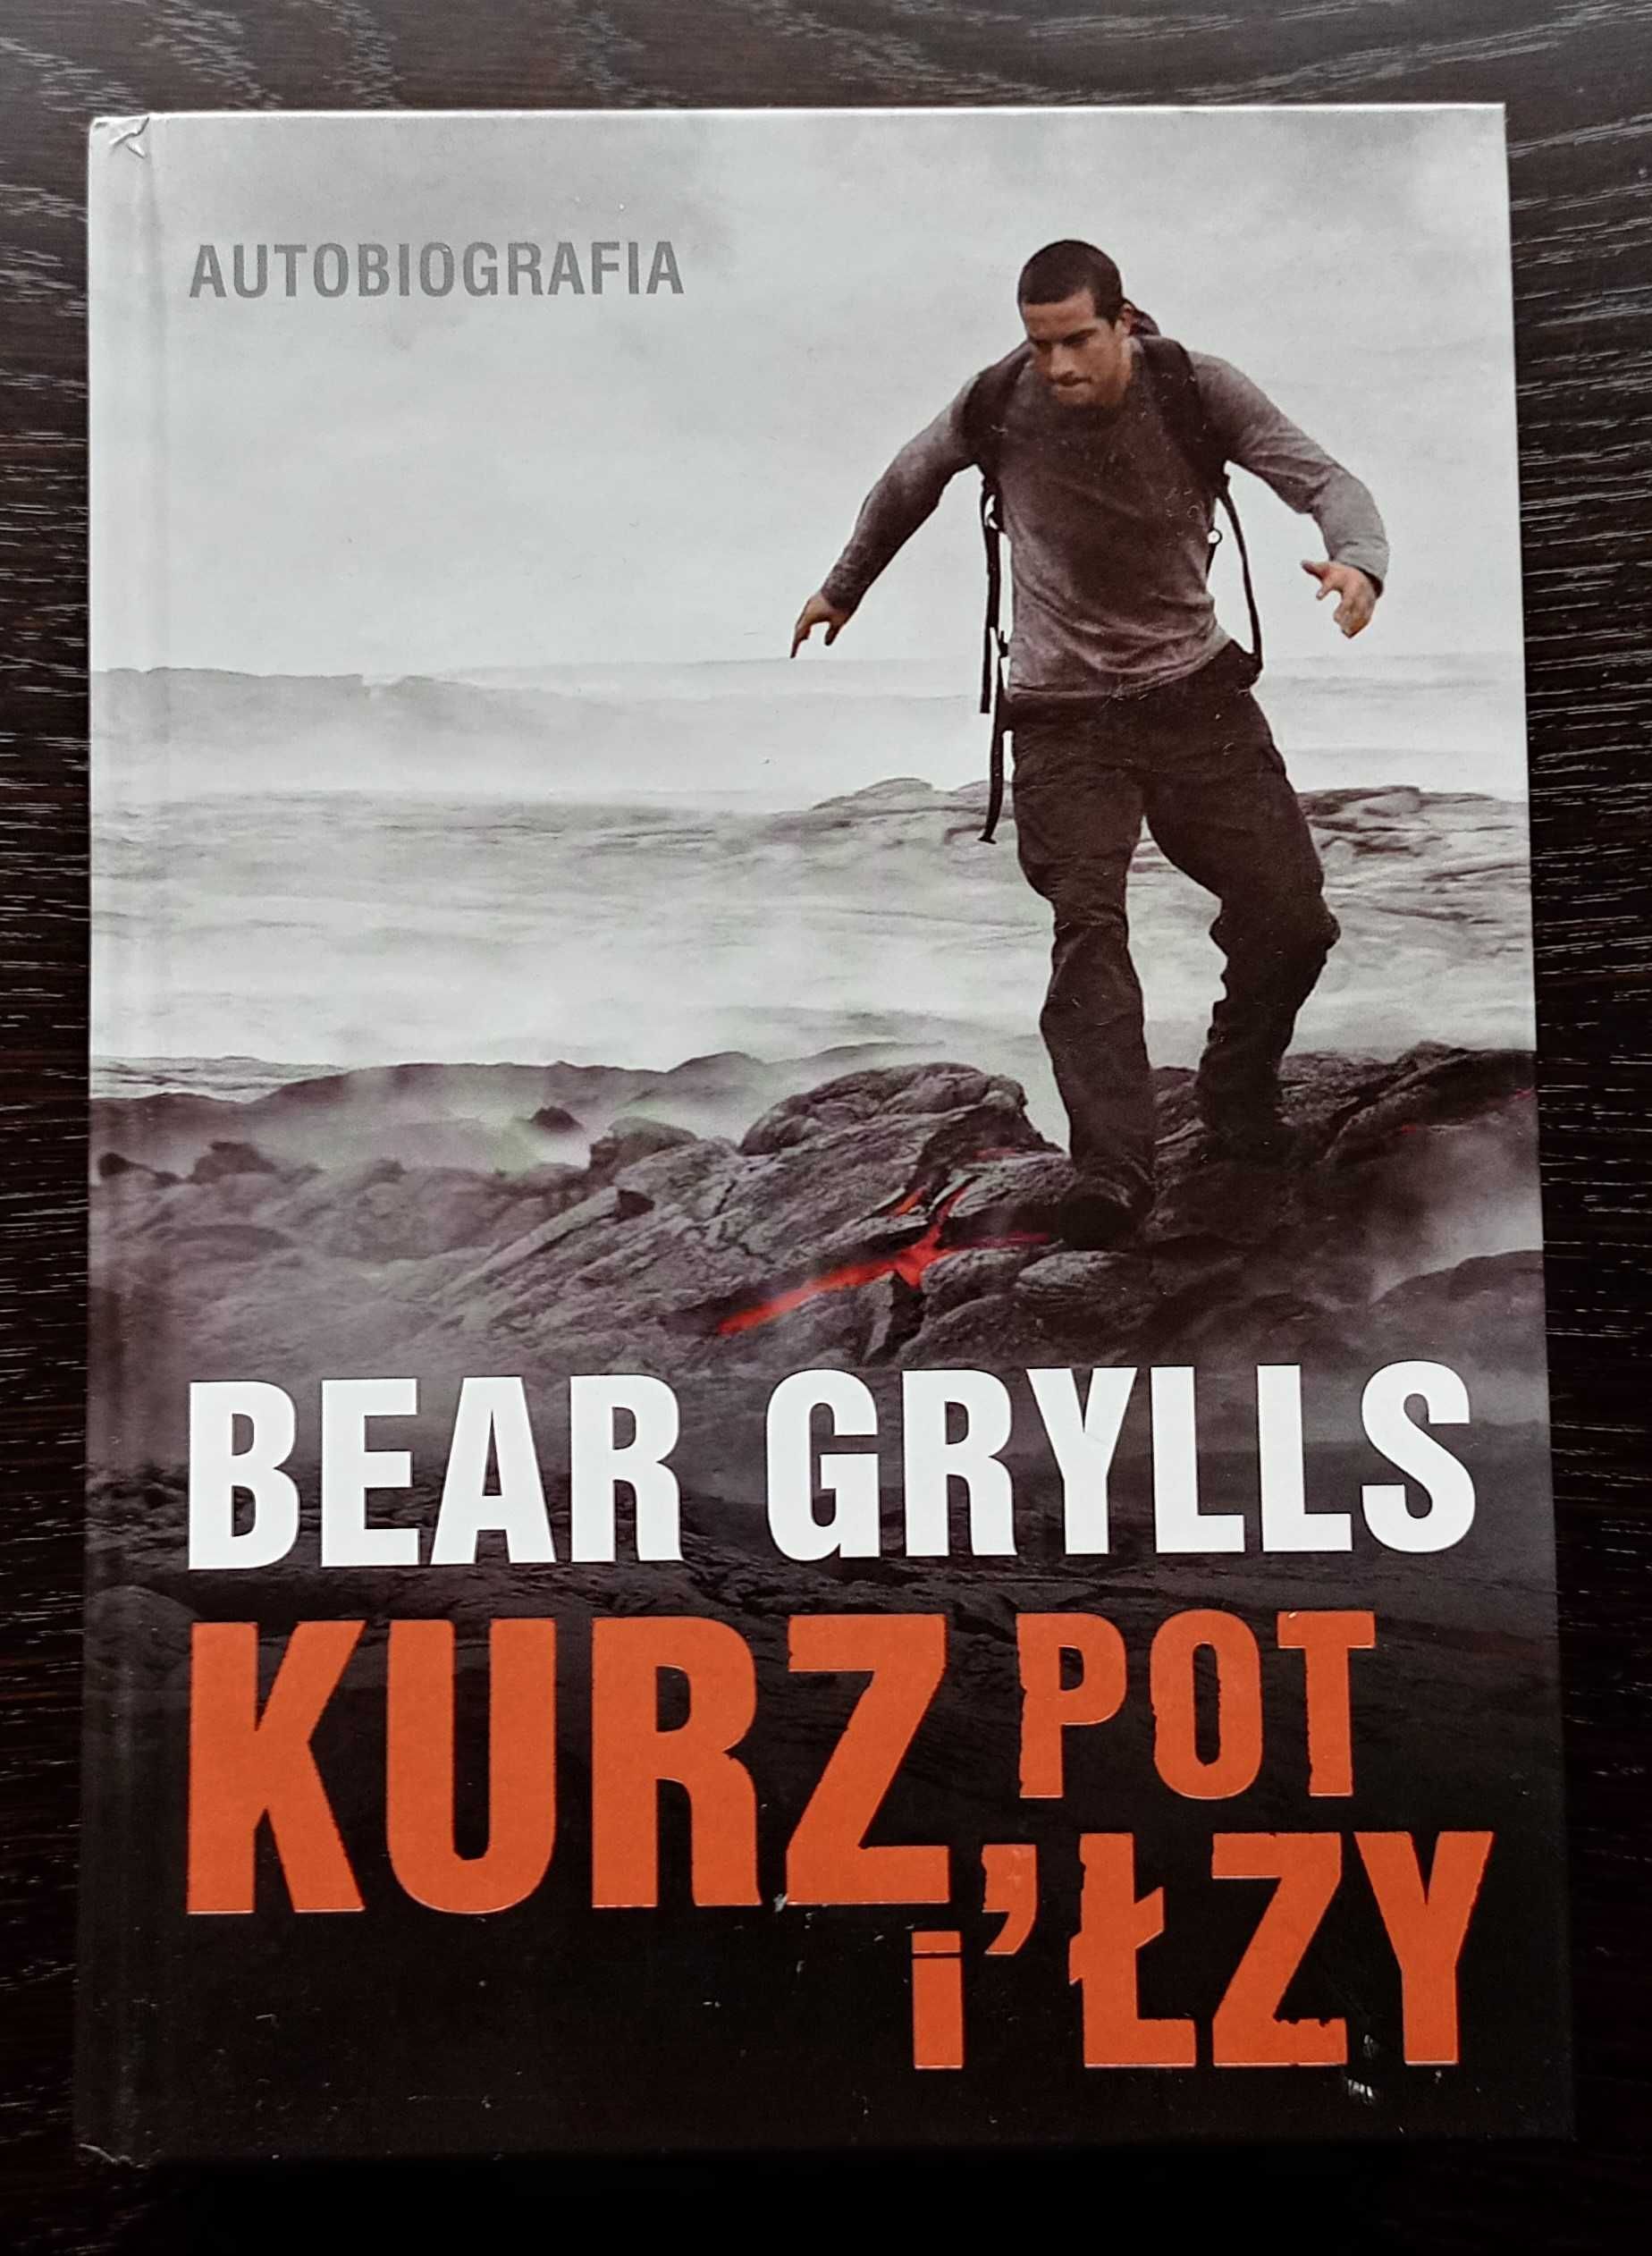 Bear Grylls - Kurz, pot i łzy (autobiografia)